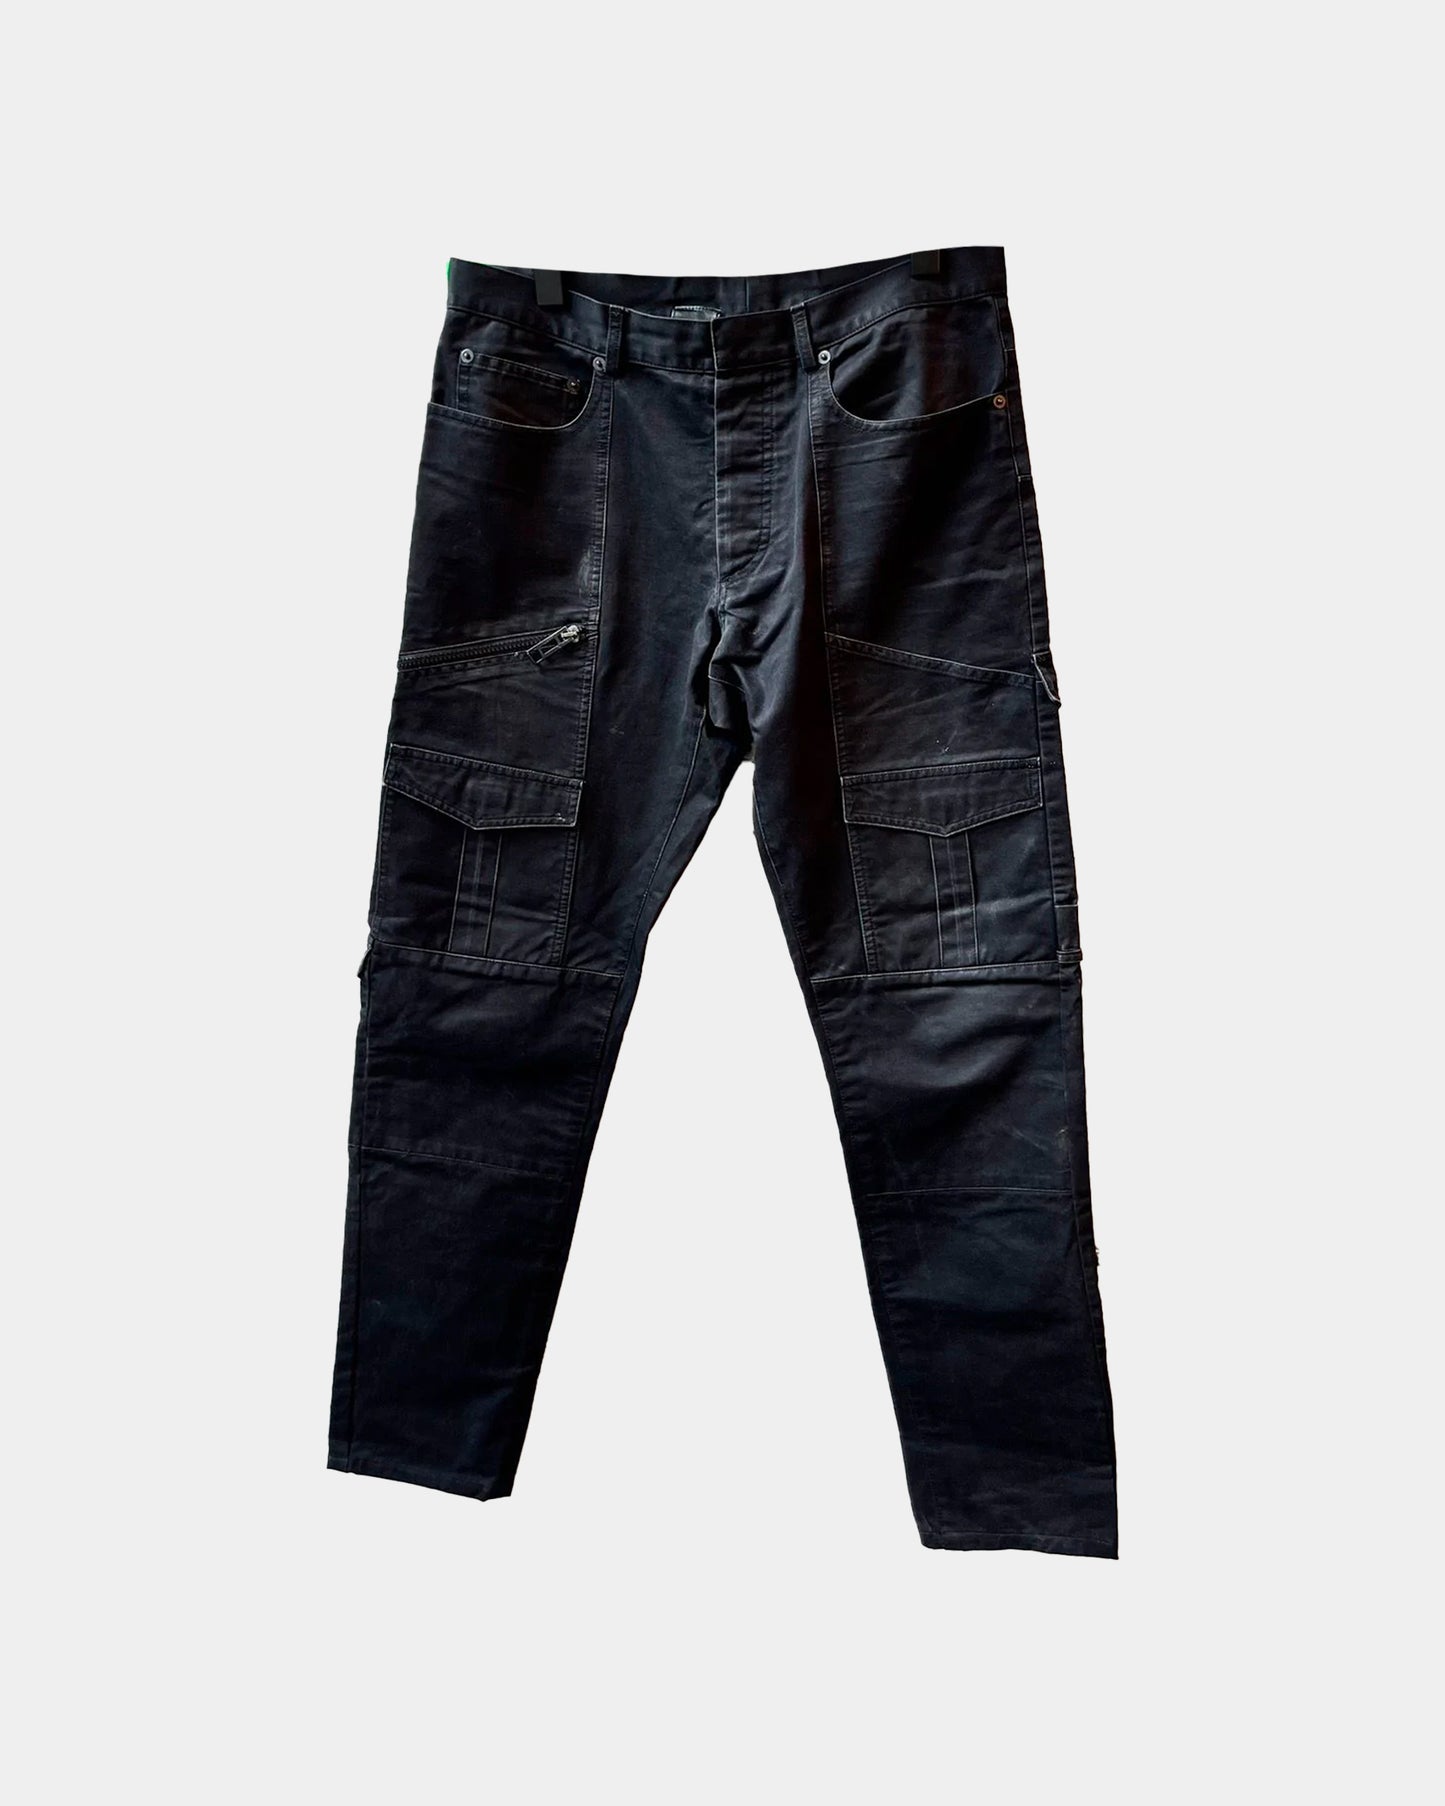 Dior Homme 04 Cargo Pants Jeans Hedi Slimane SZ 48